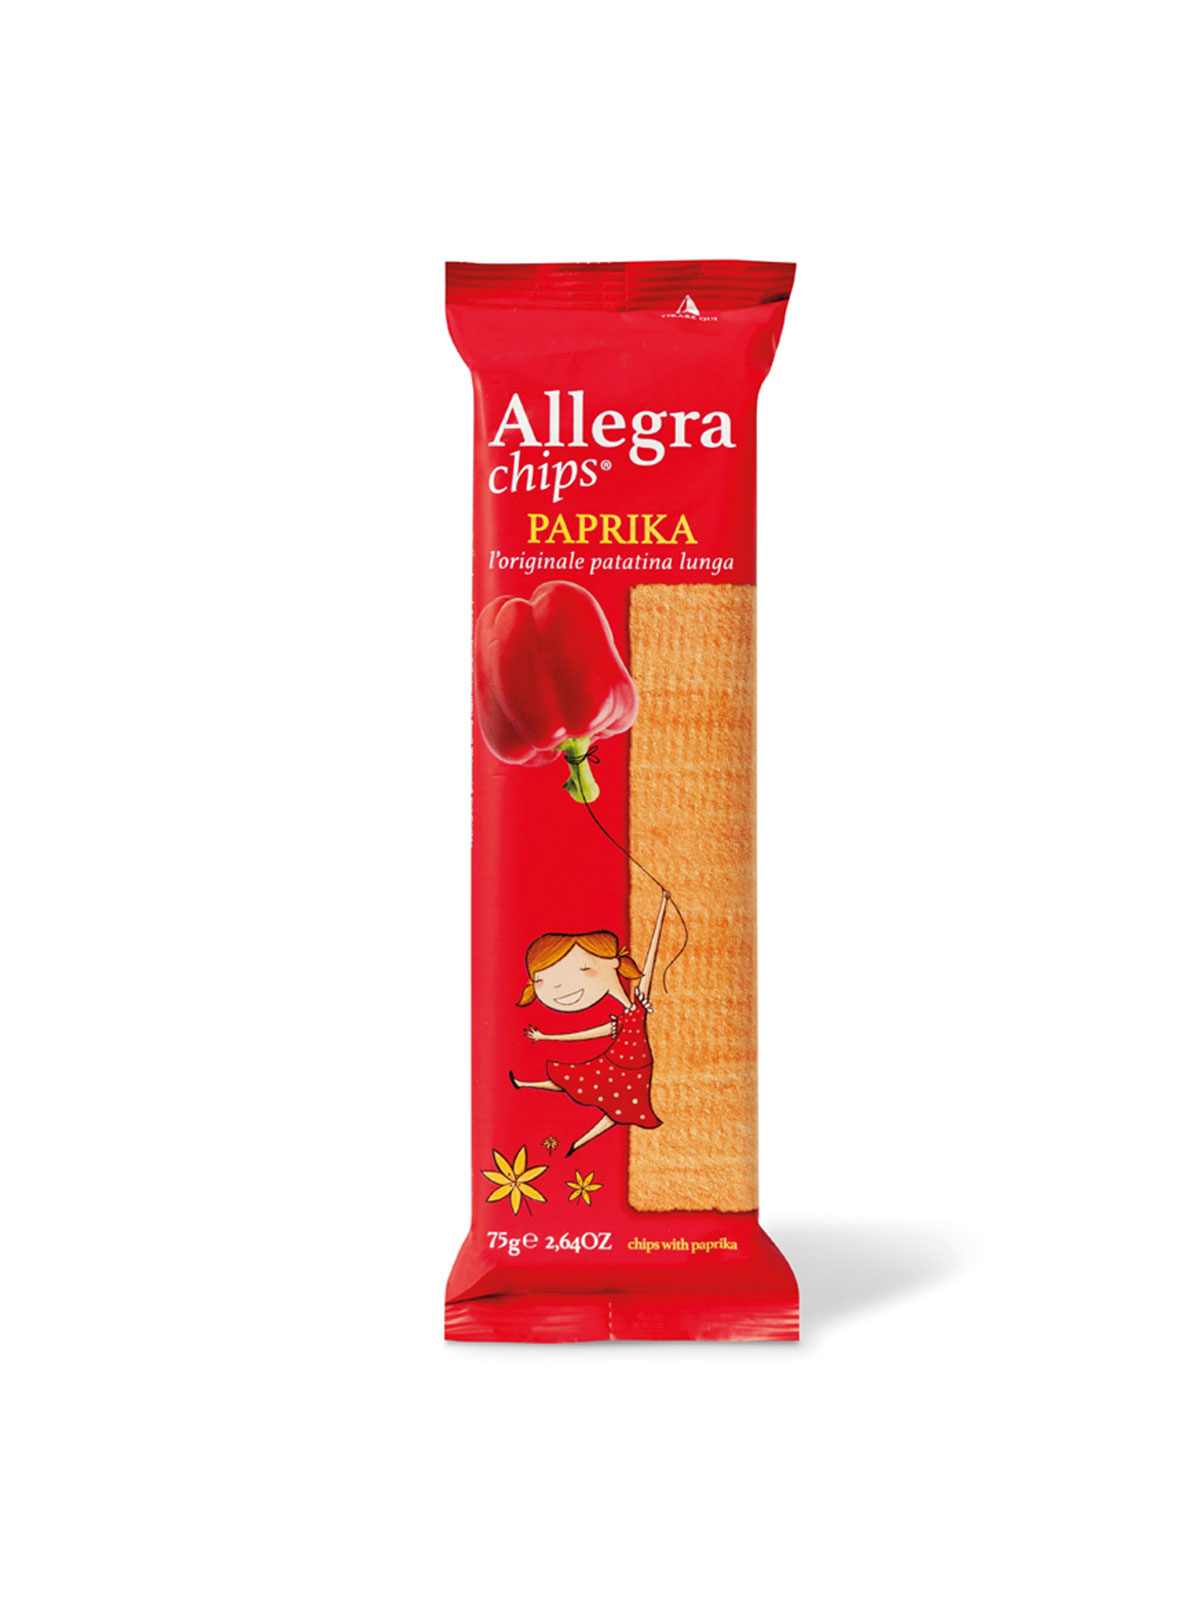 BO ALLEGRA CHIPS PAPRIKA 75 GR - Snacks, Sweets, Treats & Snacks - Buon'Italia